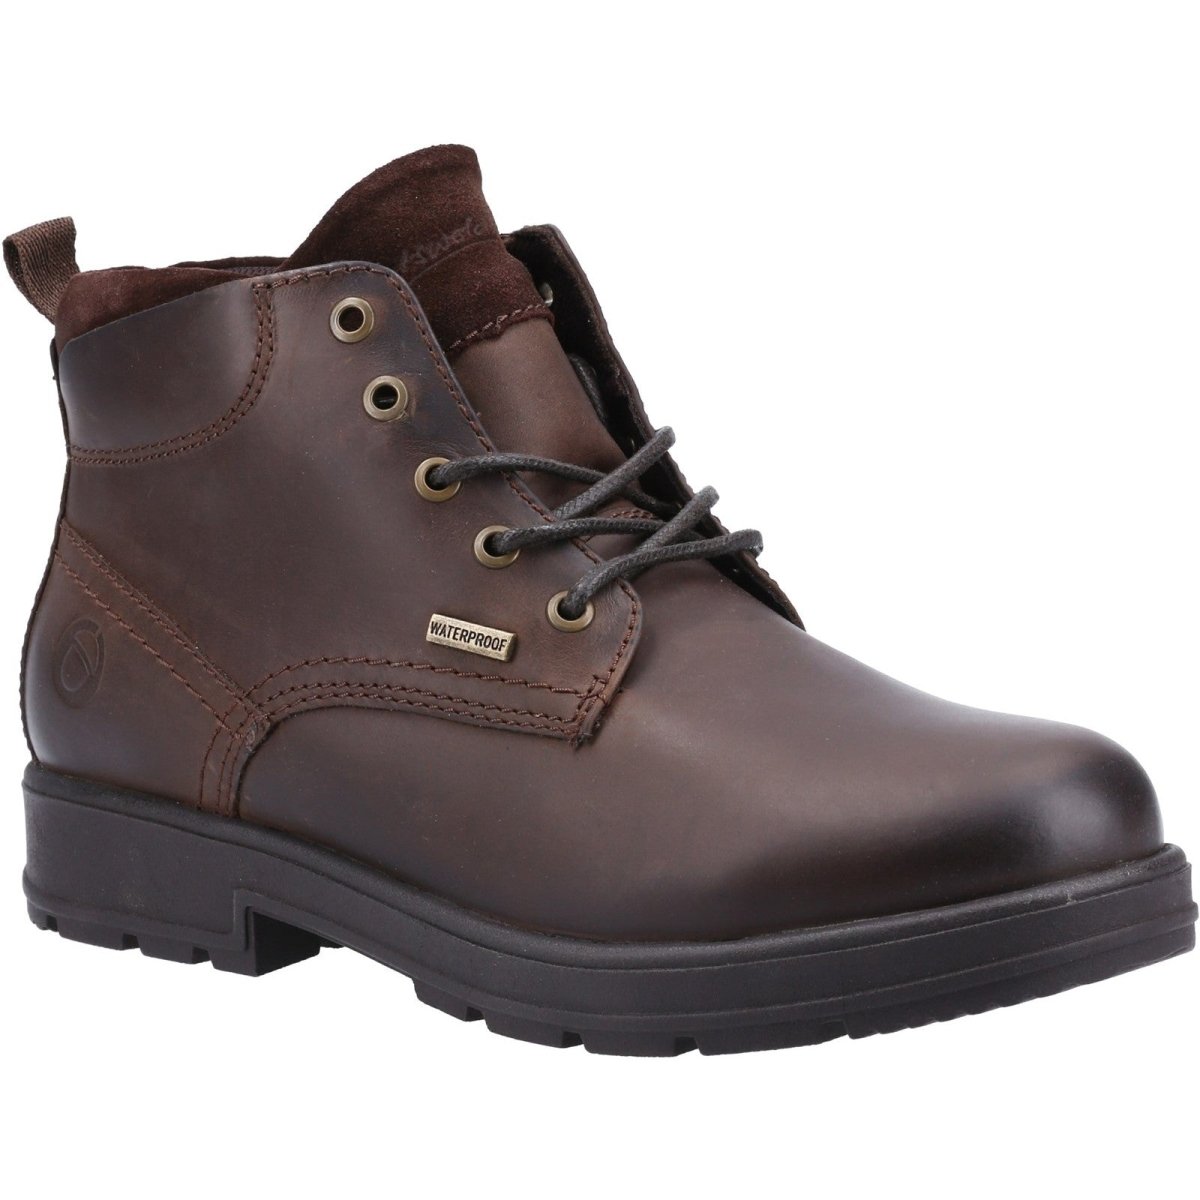 Cotswold Winson Boots - Shoe Store Direct